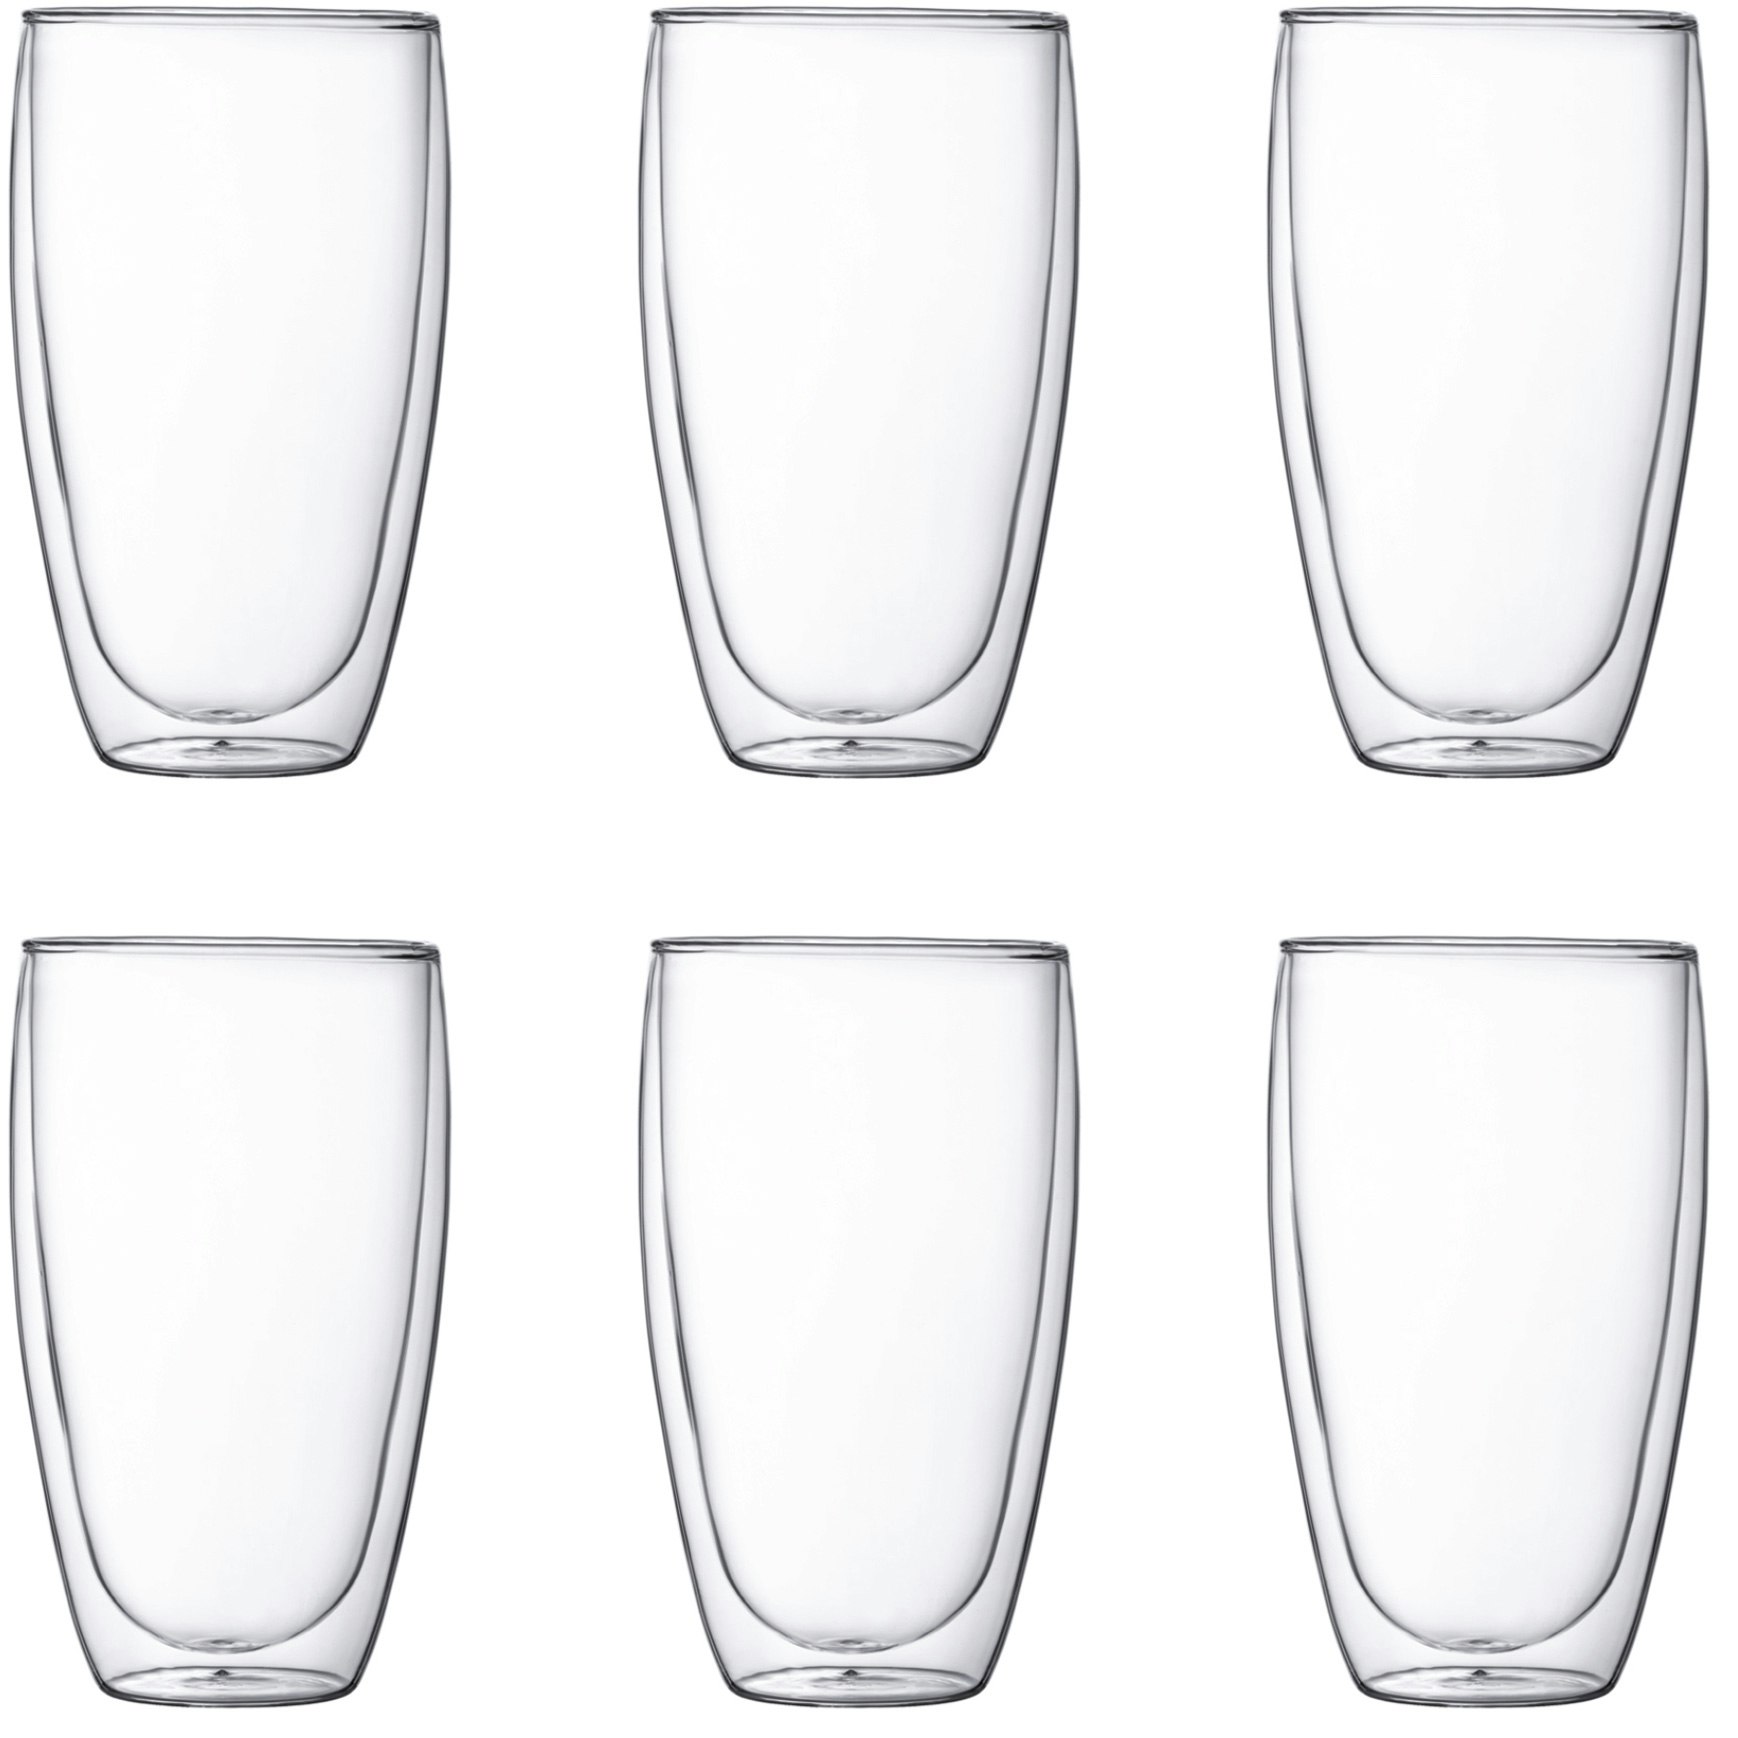 https://royaldesign.com/image/2/bodum-pavina-double-walled-glasses-6-pack-4